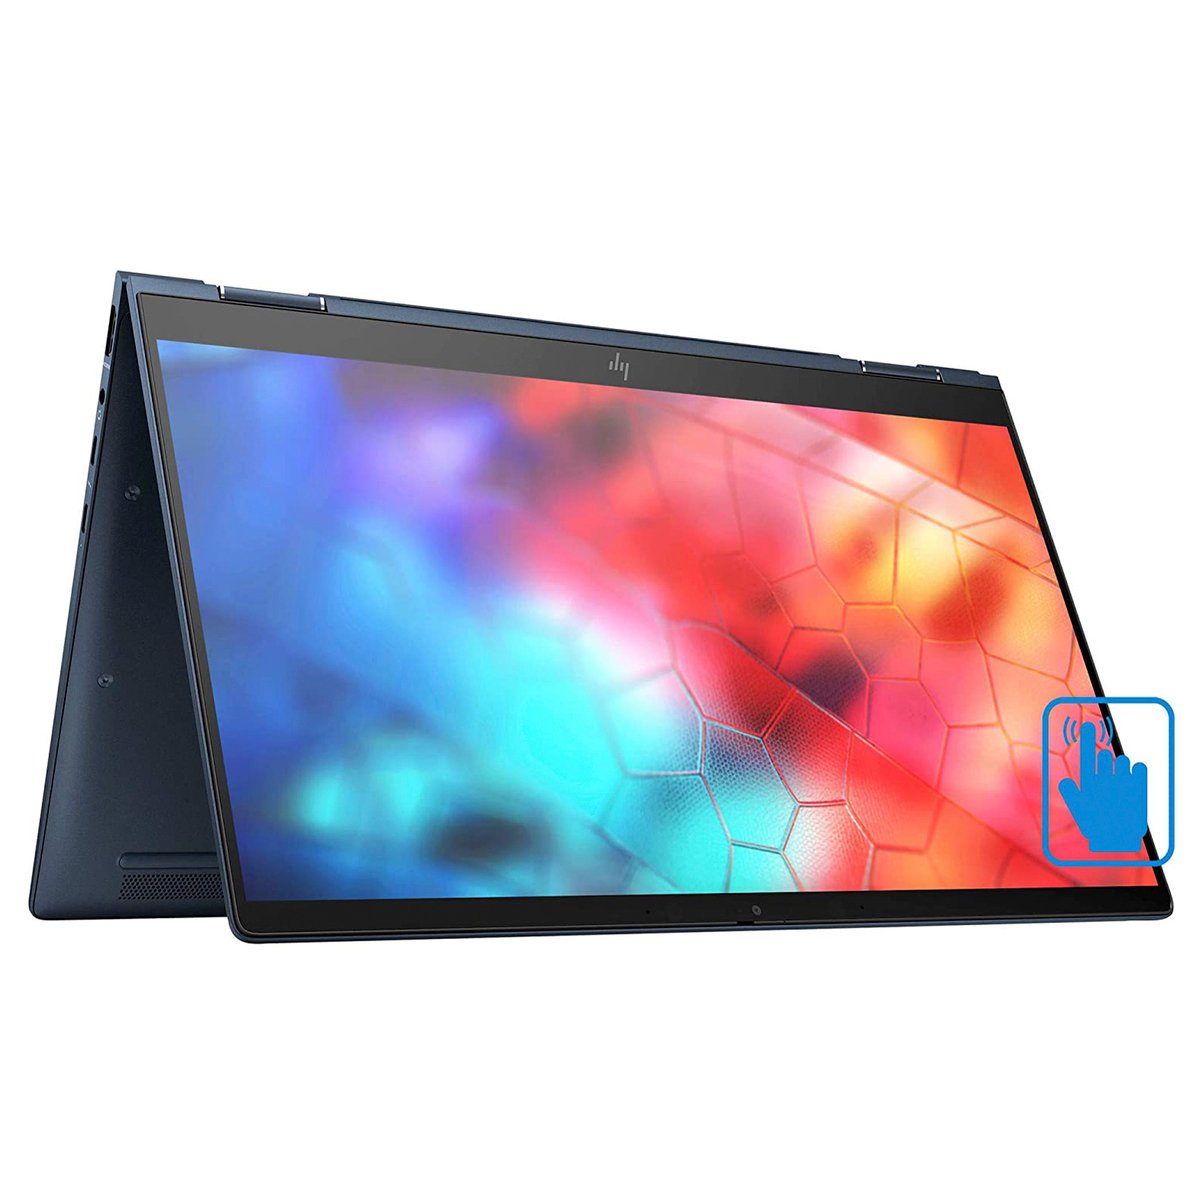 HP Elite Dragonfly x360 Home and Business Laptop (Intel i7-8565U 4-Core, 16GB RAM, 512GB SSD, Intel UHD 620, 13.3" Touch Full HD,Black